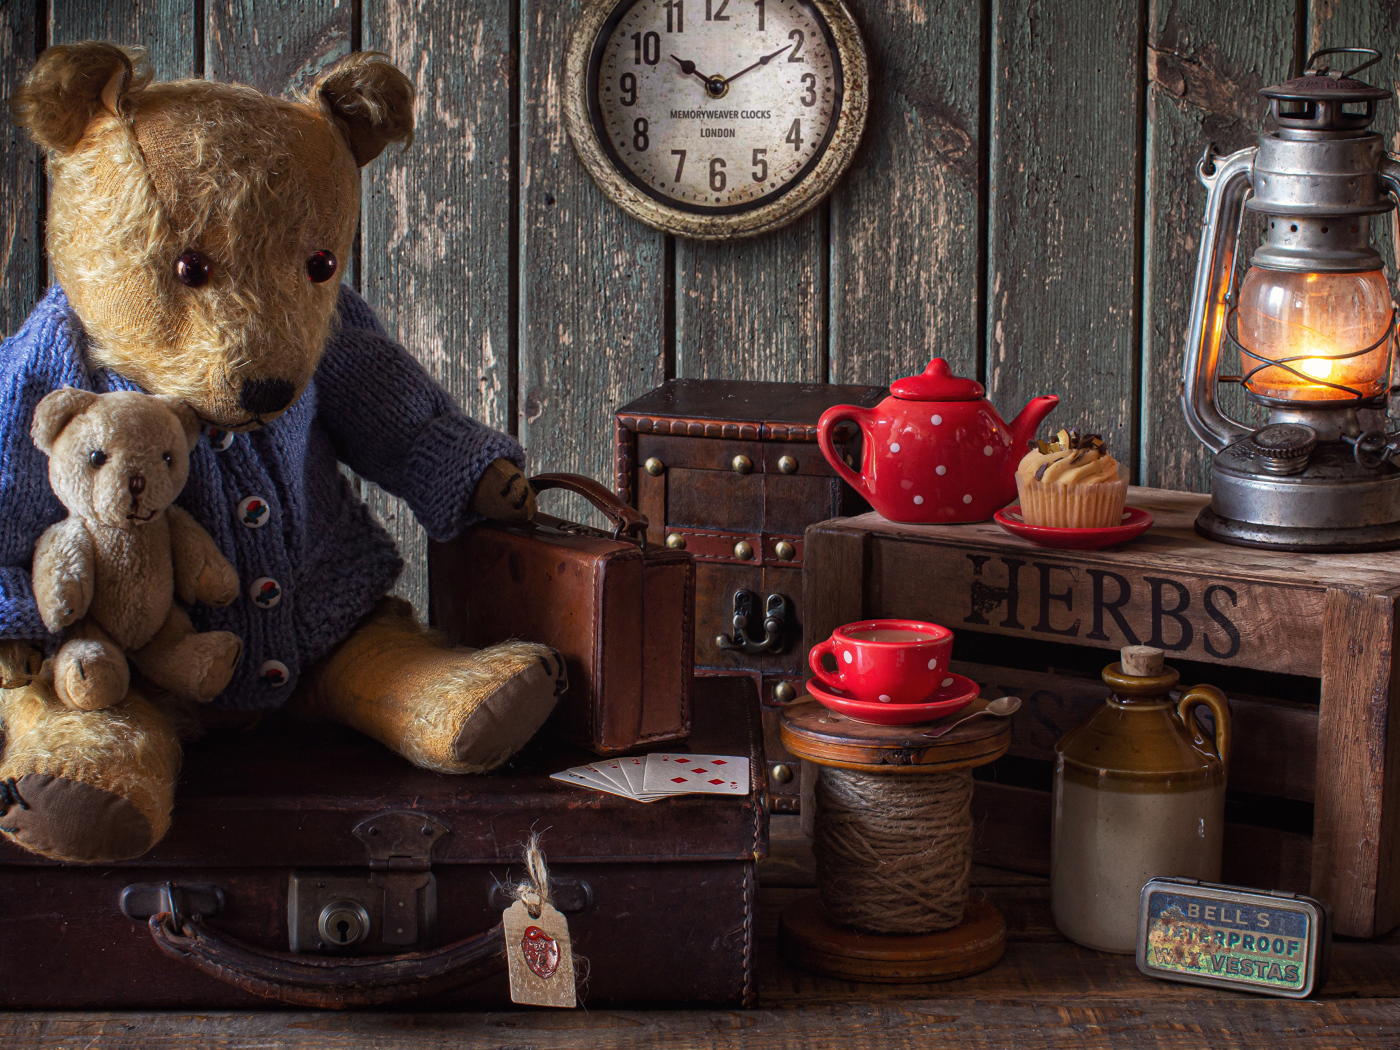 Old teddy bear with toys on the table